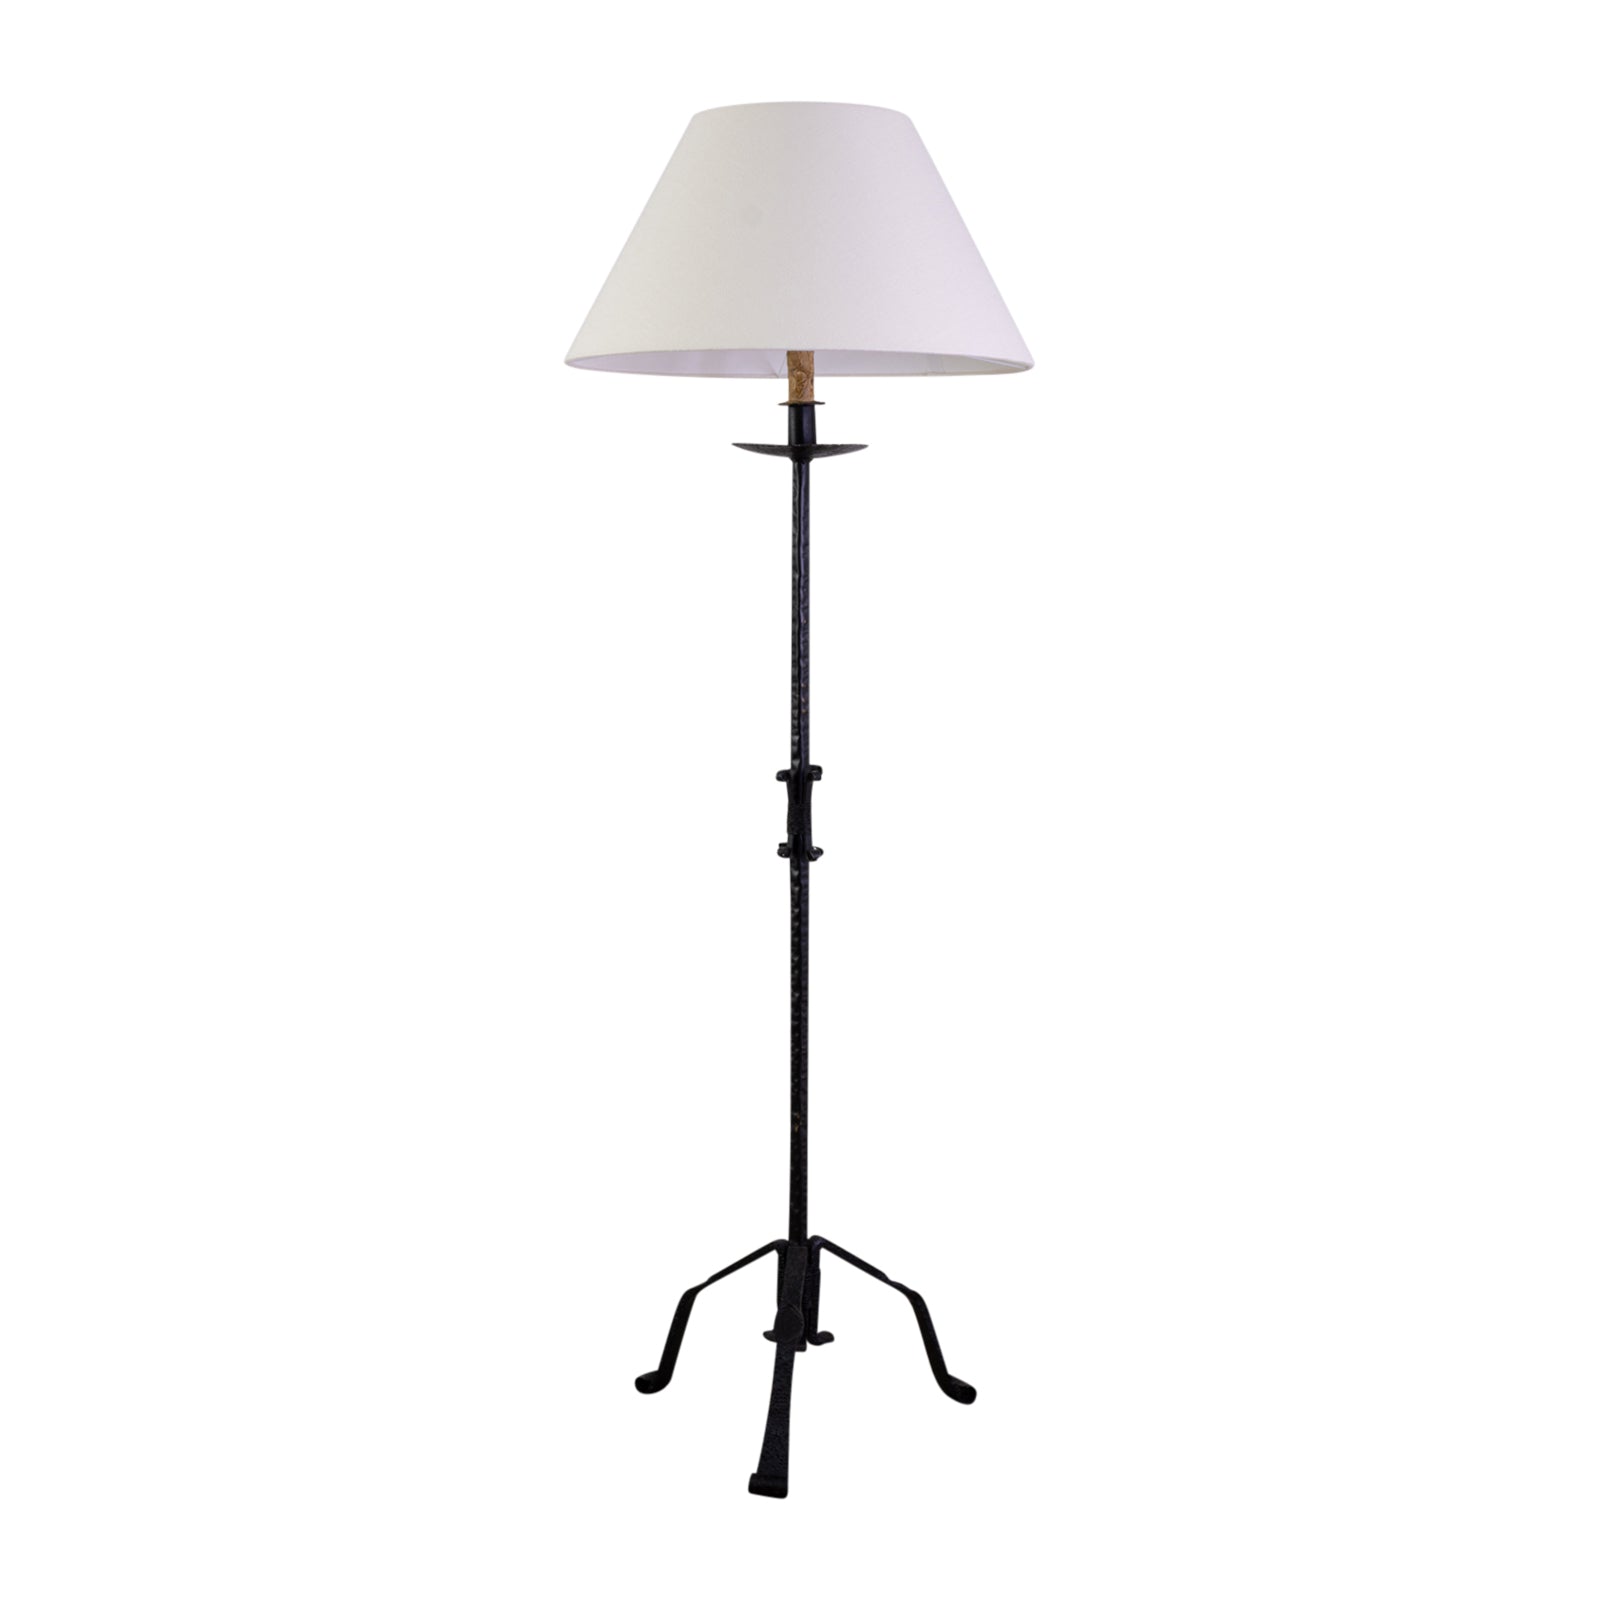 Mid 20th Century Spanish Standard Lamp